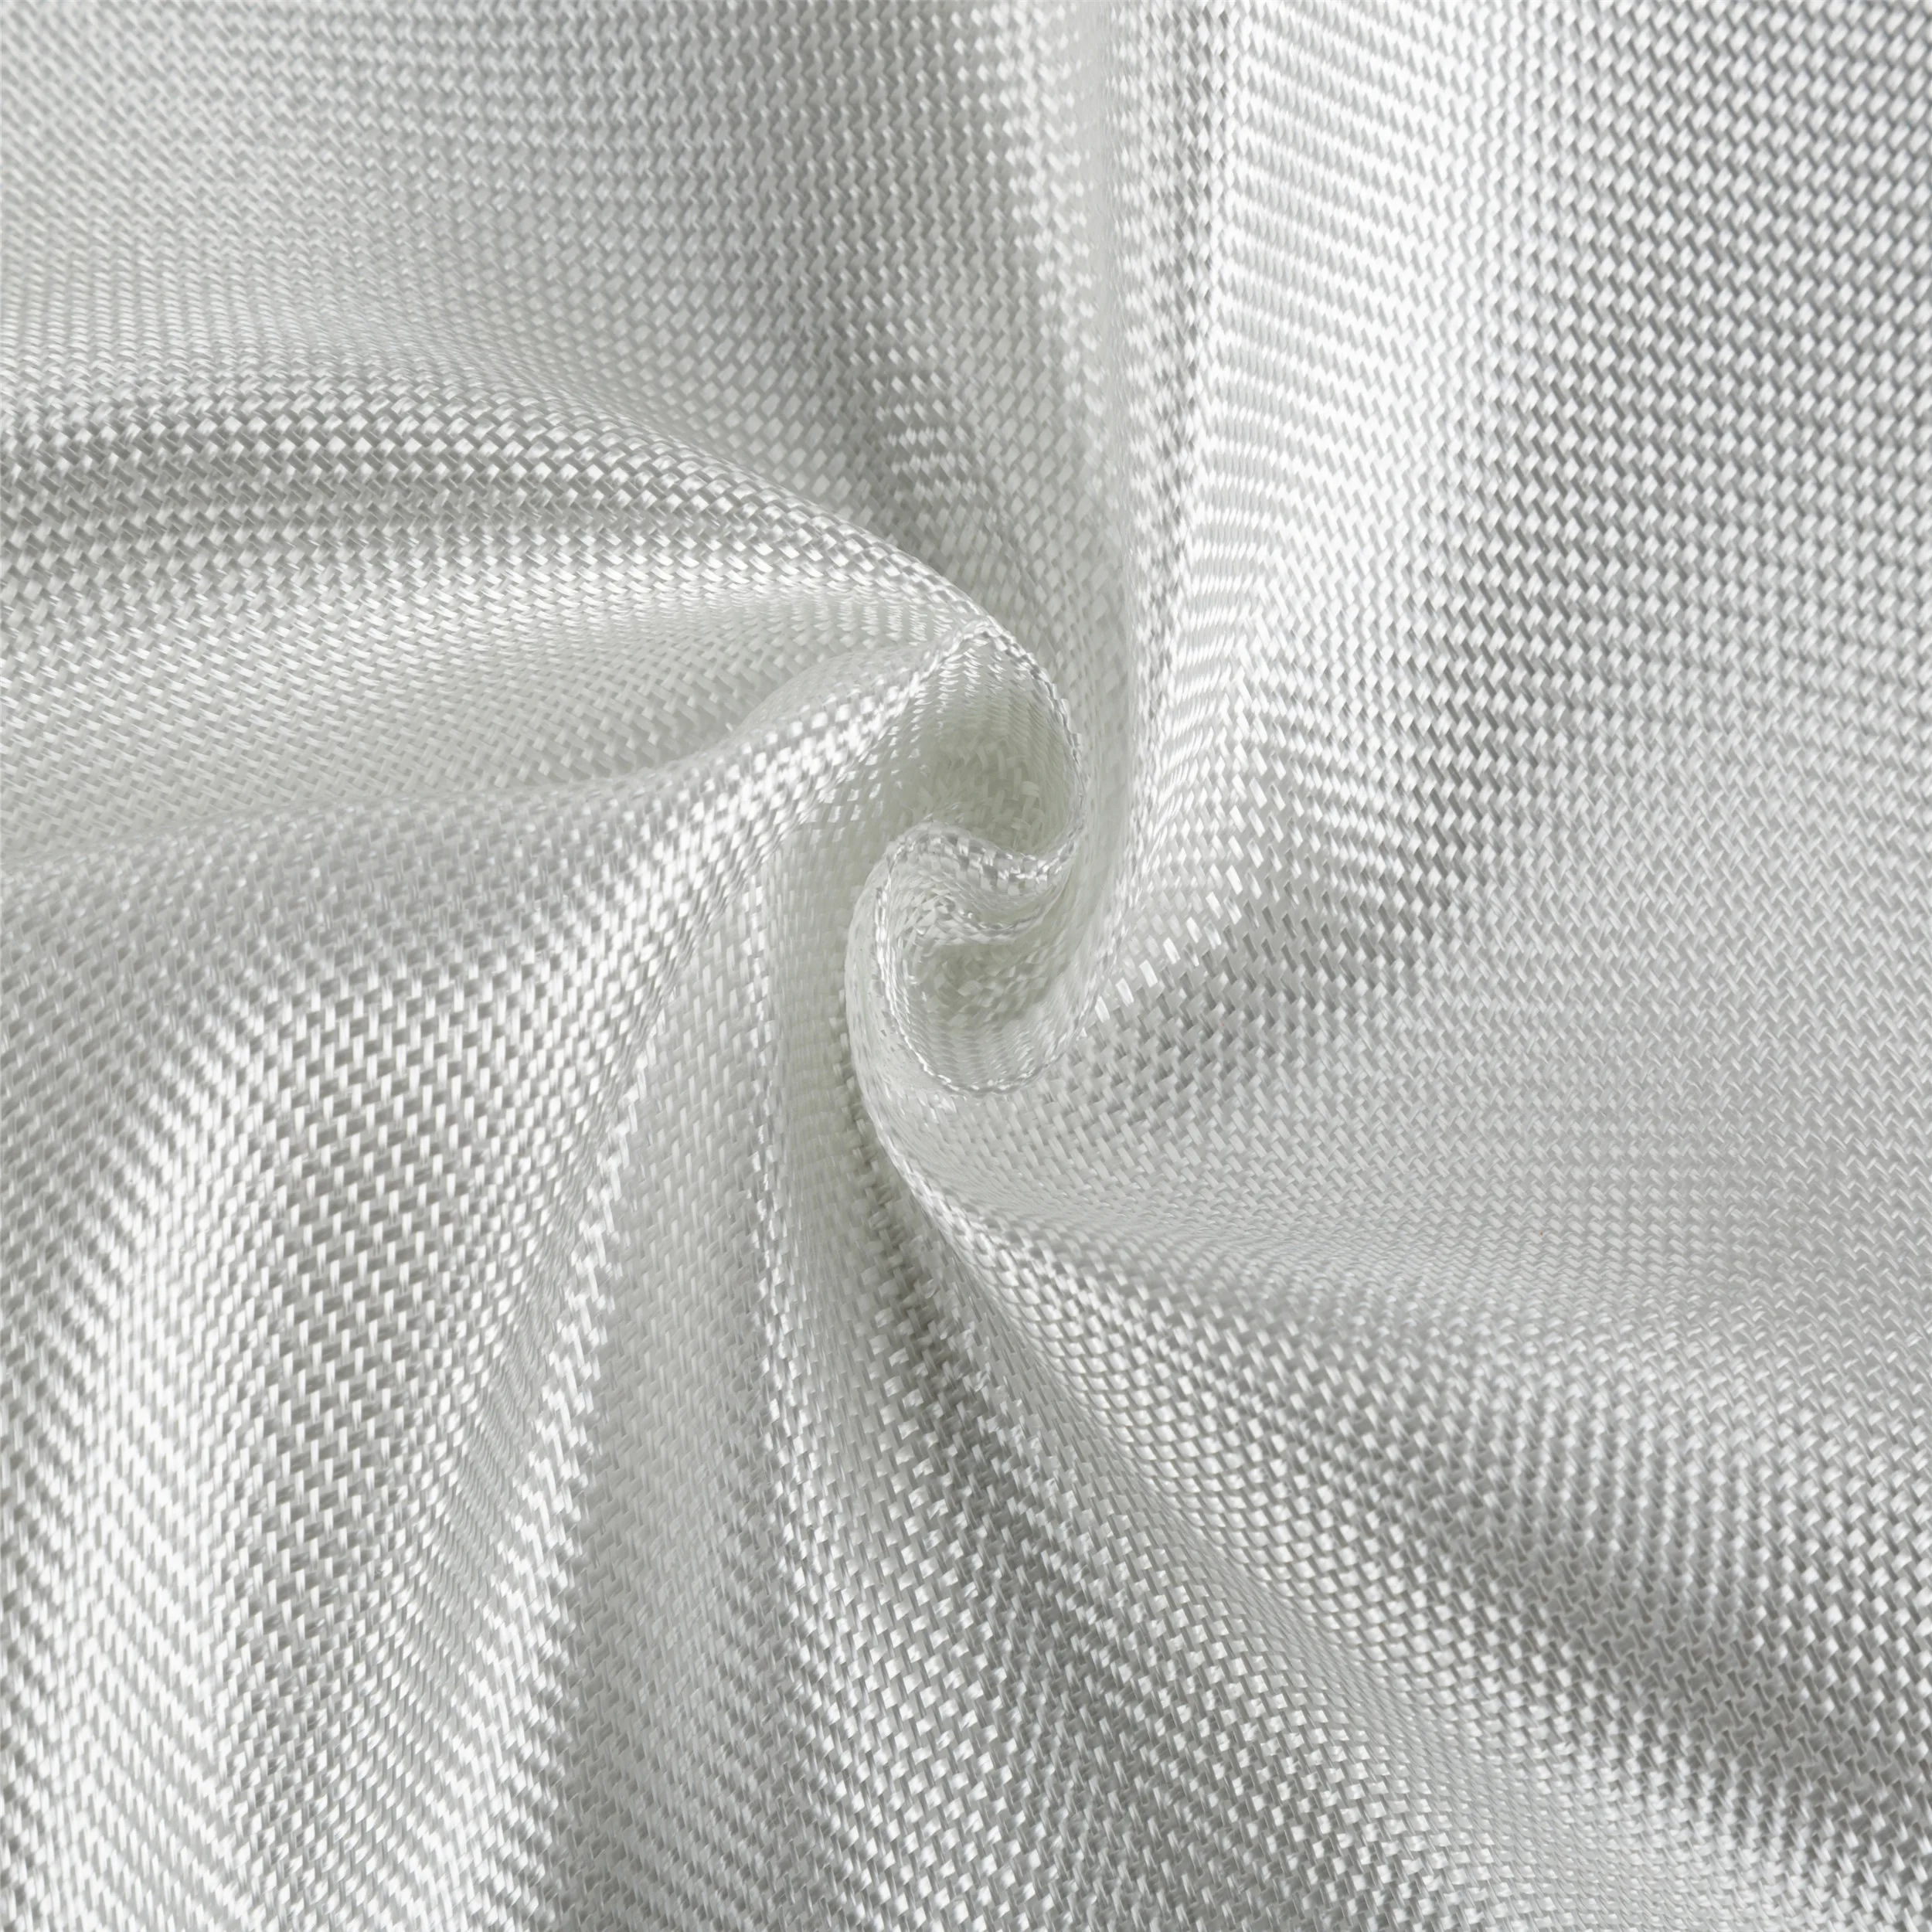 60" wide 100' feet length Best quality Fiberglass Cloth Plain Weave 6oz 200g 